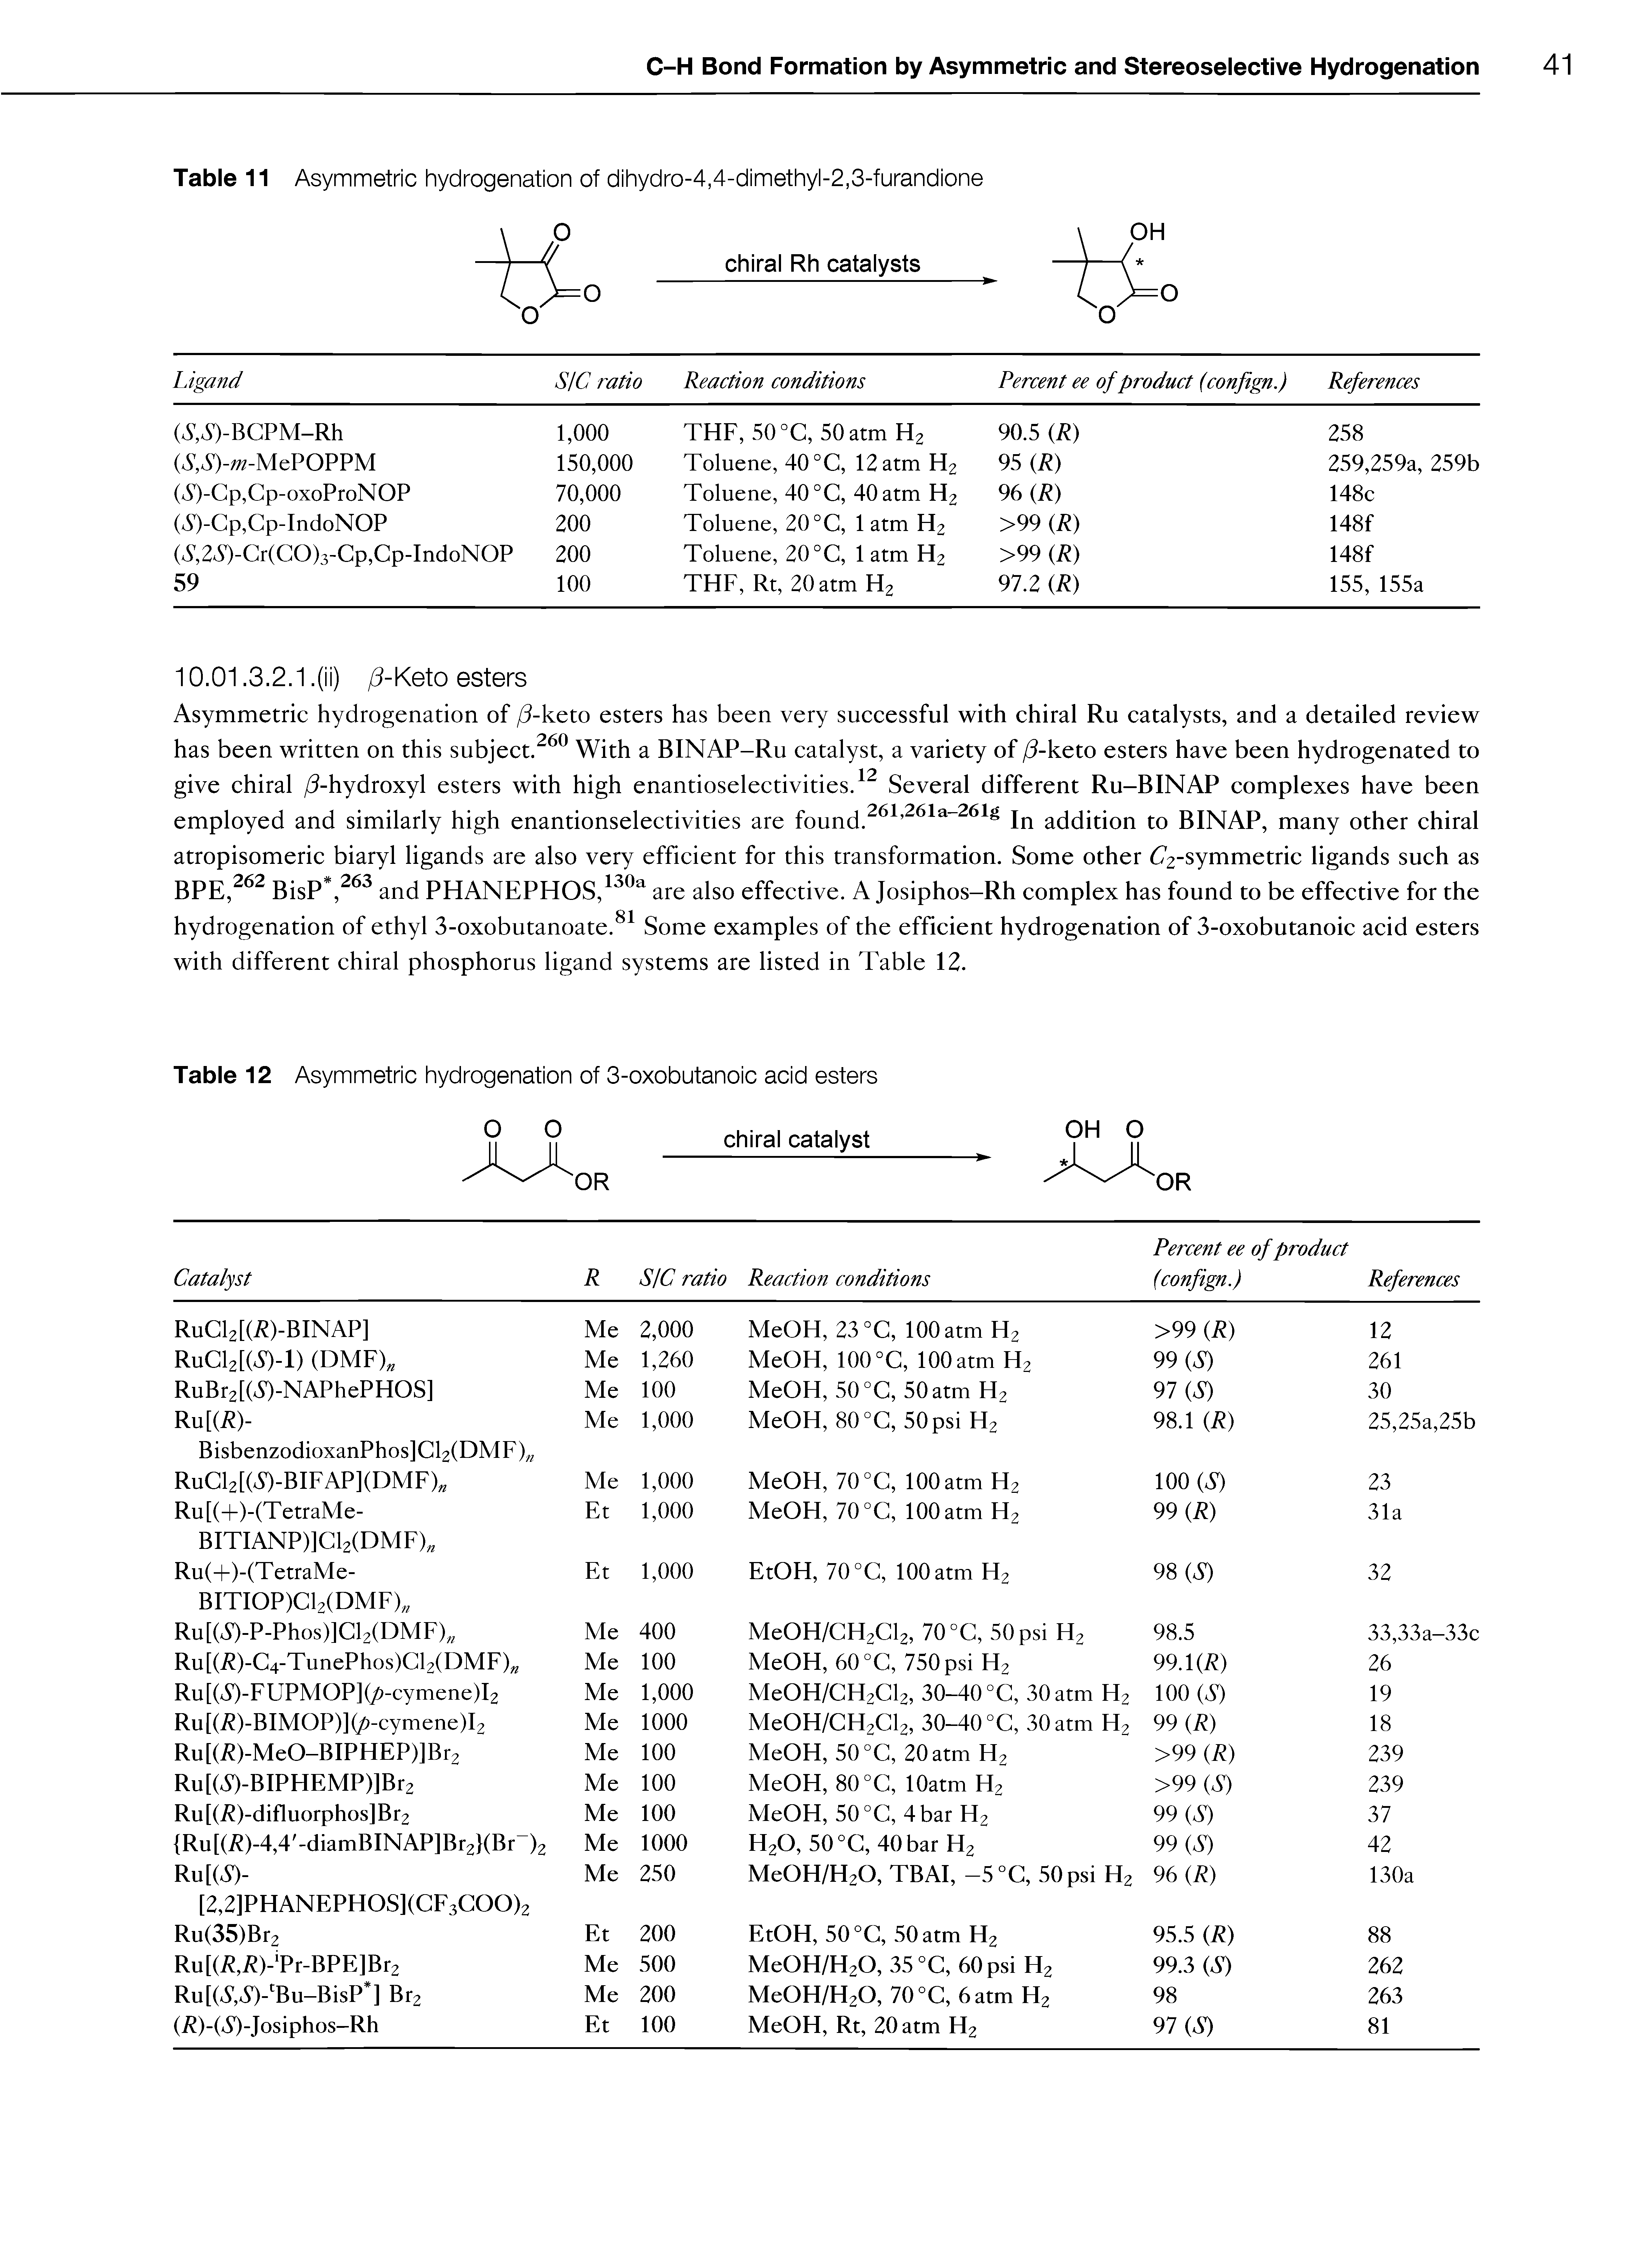 Table 12 Asymmetric hydrogenation of 3-oxobutanoic acid esters...